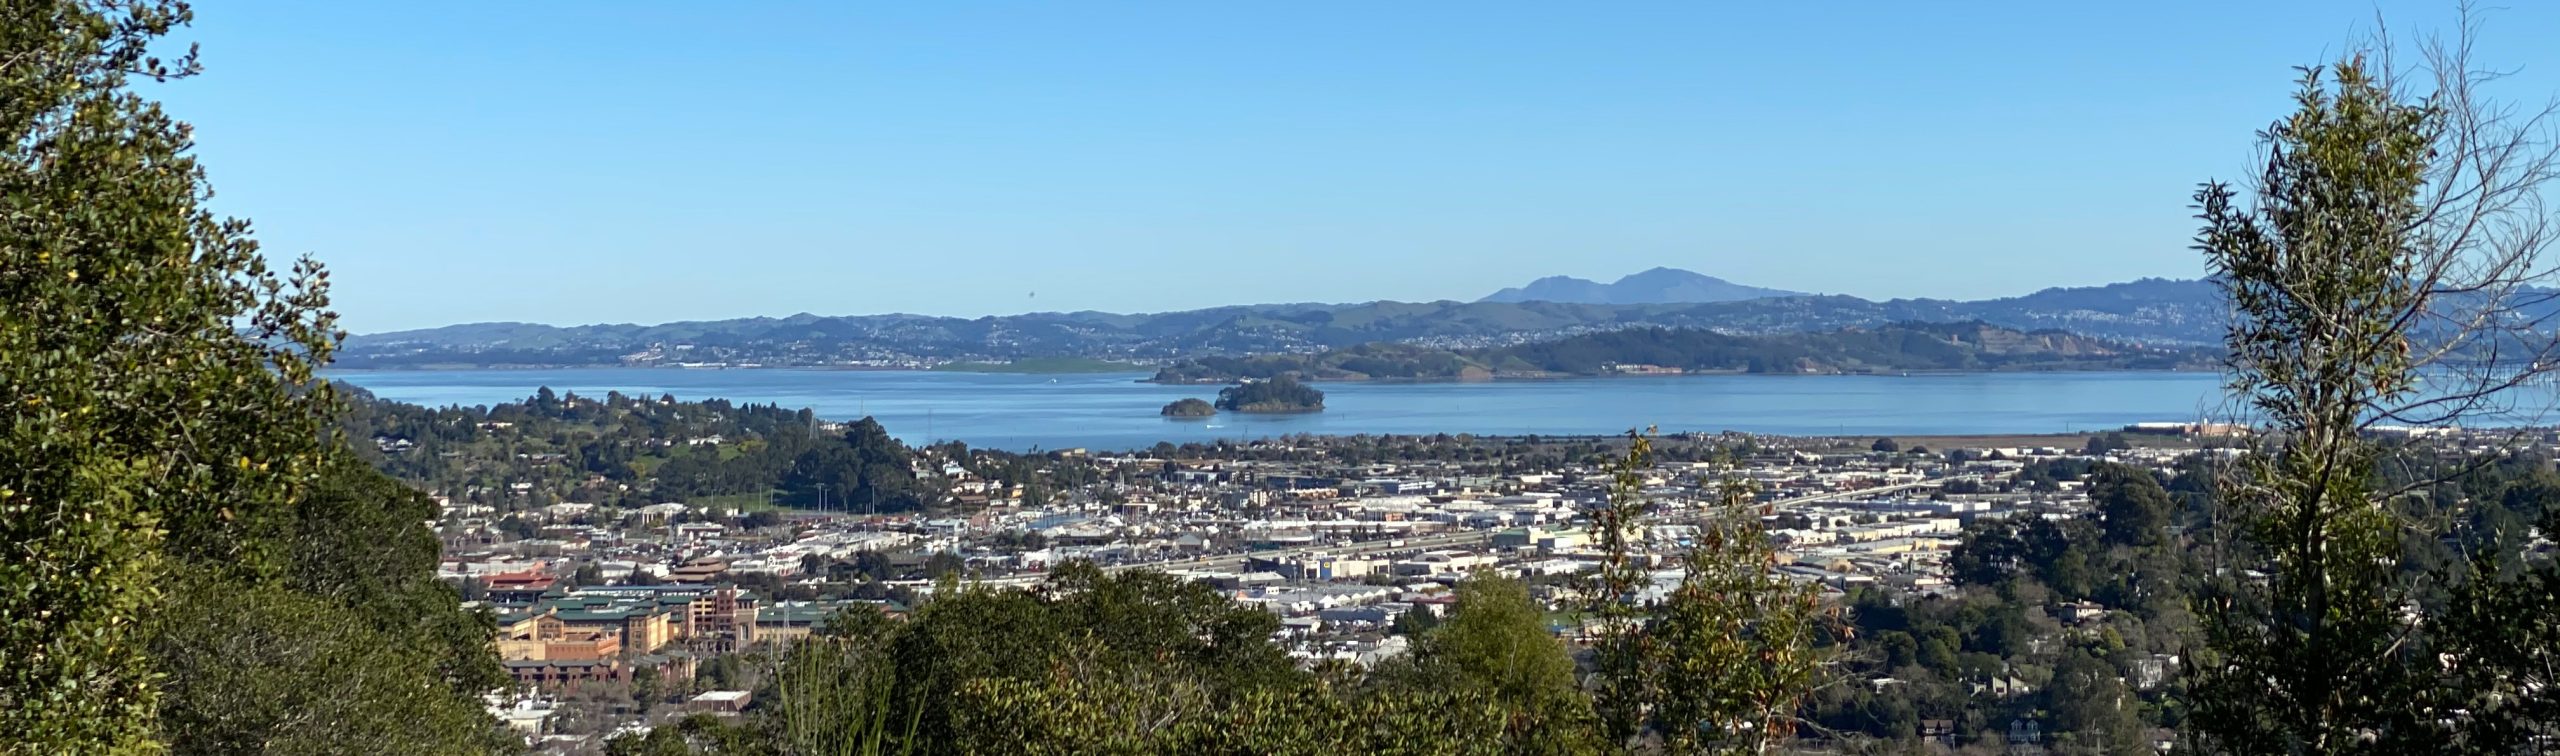 View of San Rafael